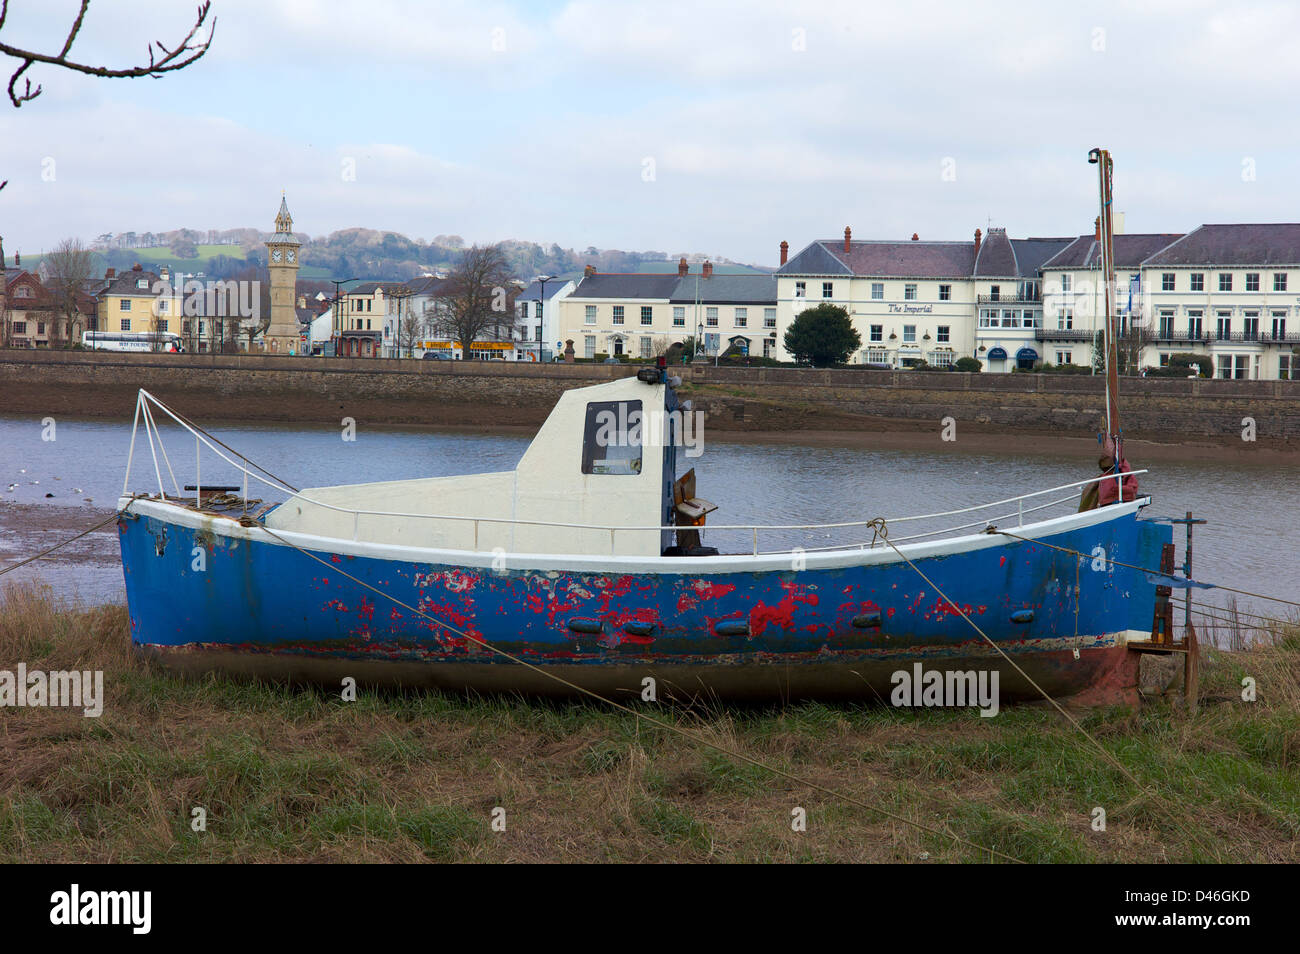 Boat on dry land by River Taw, Barnstaple, Devon, UK Stock Photo